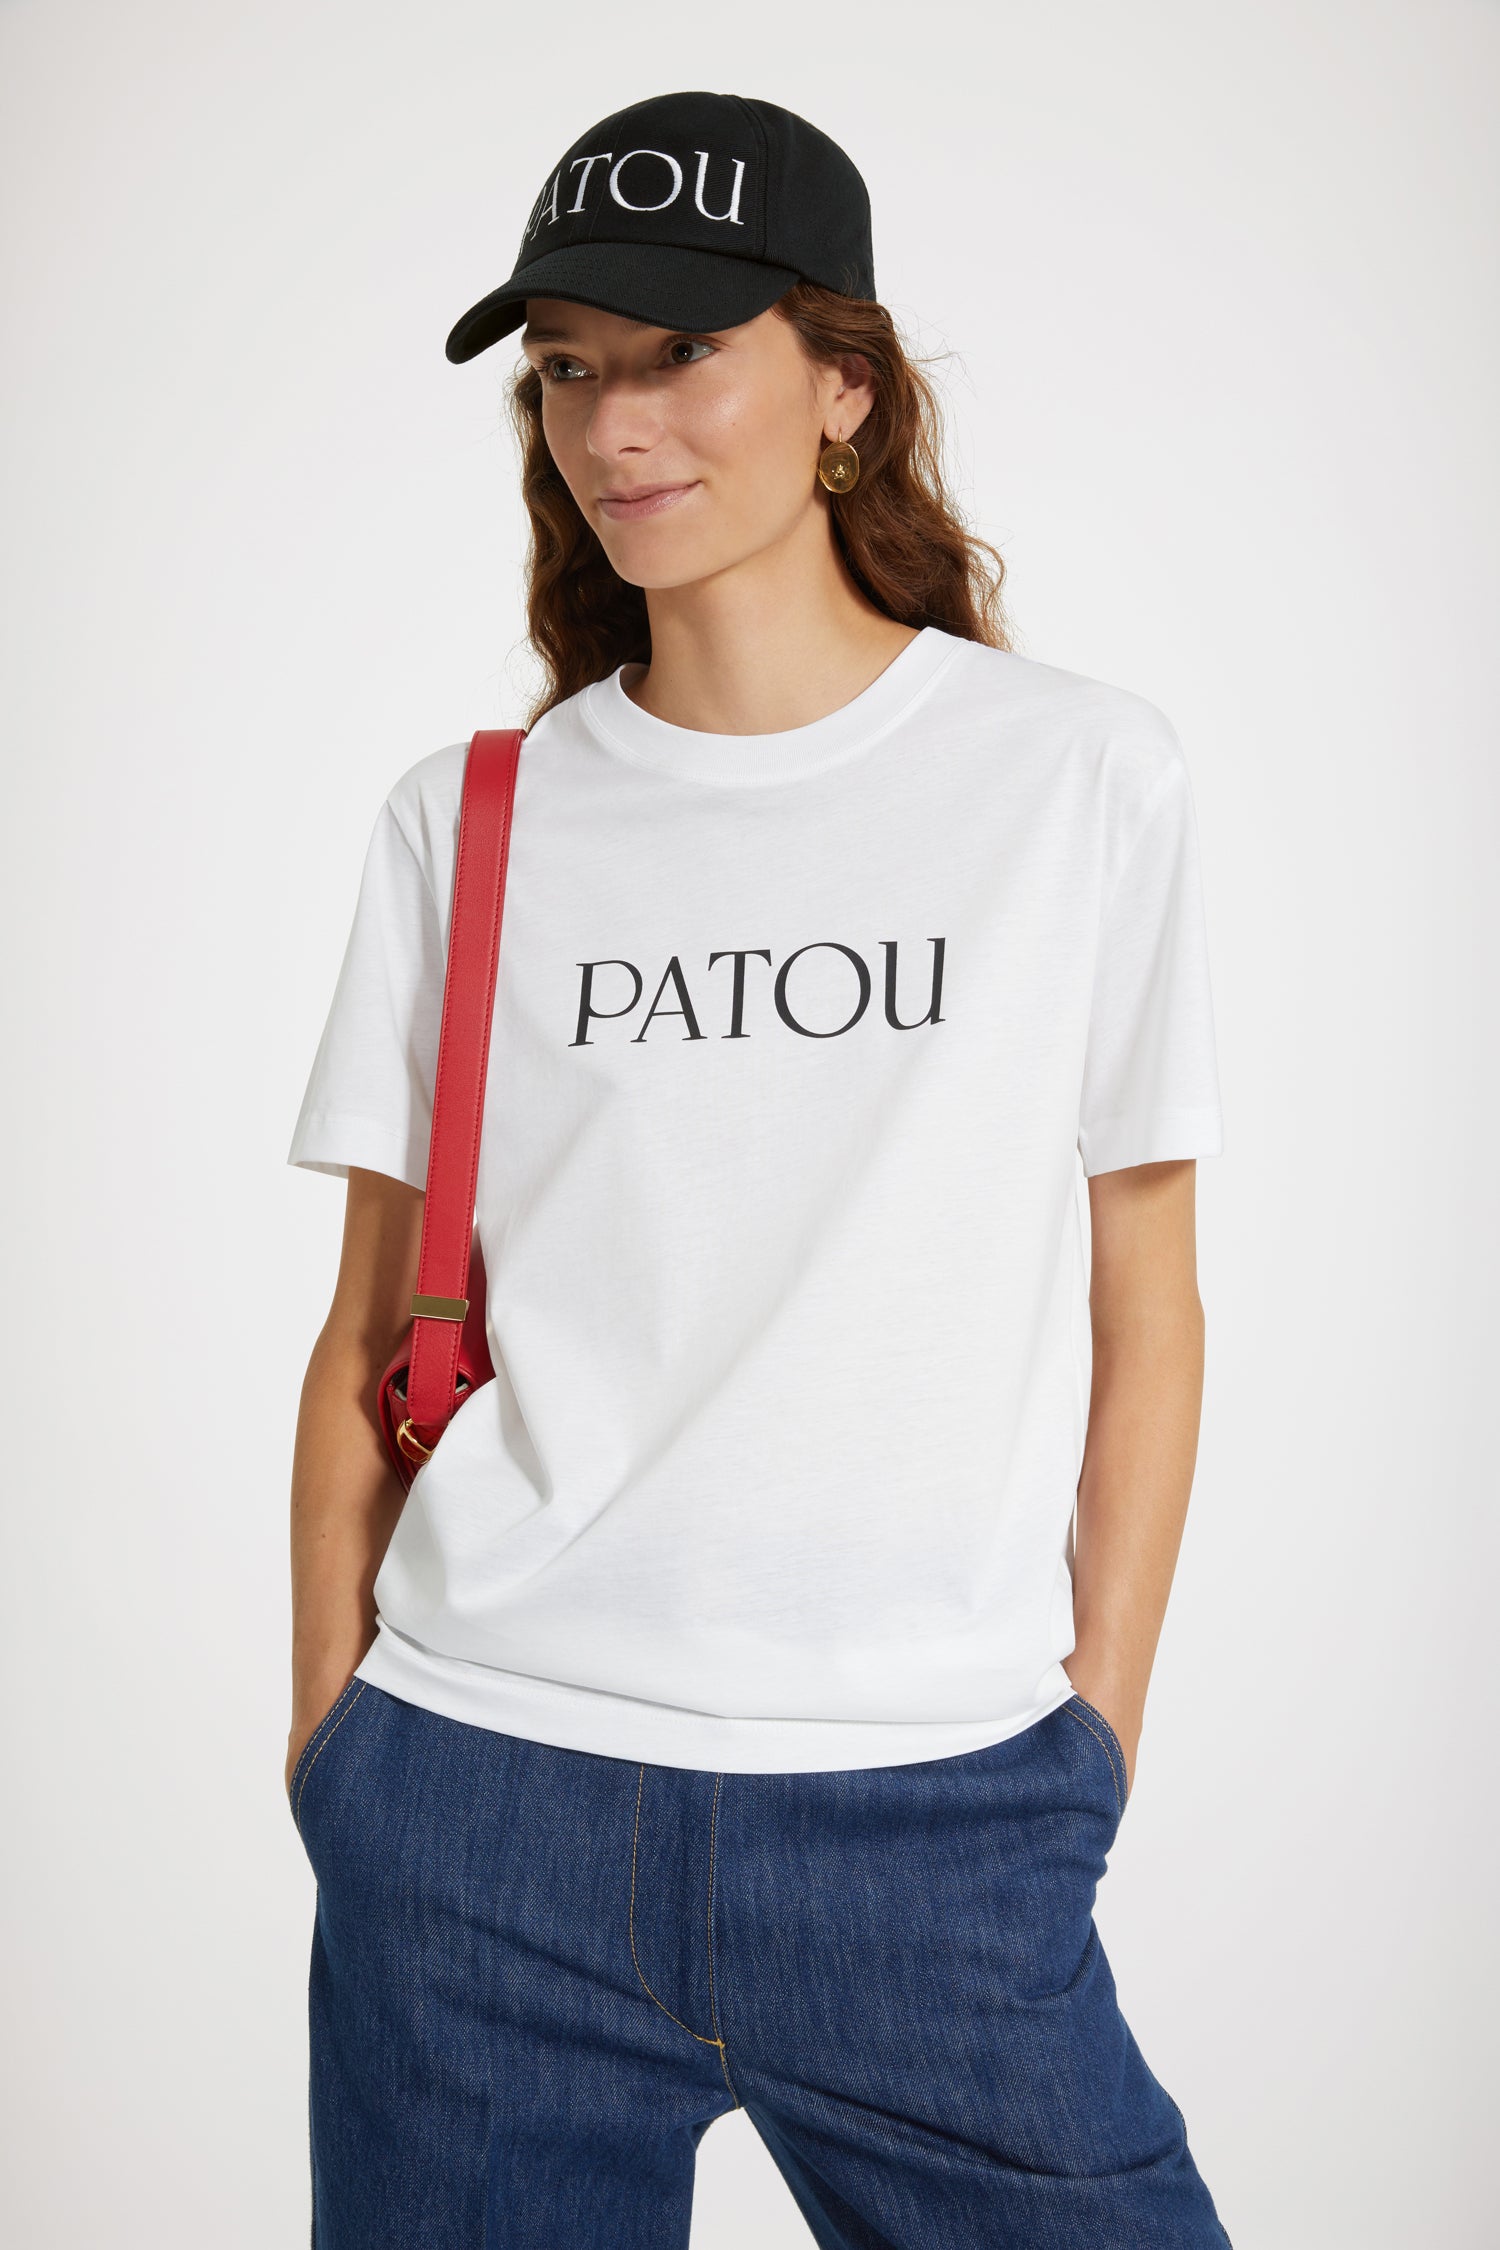 PATOU「オーガニックコットン パトゥロゴTシャツ 」 Sサイズ-